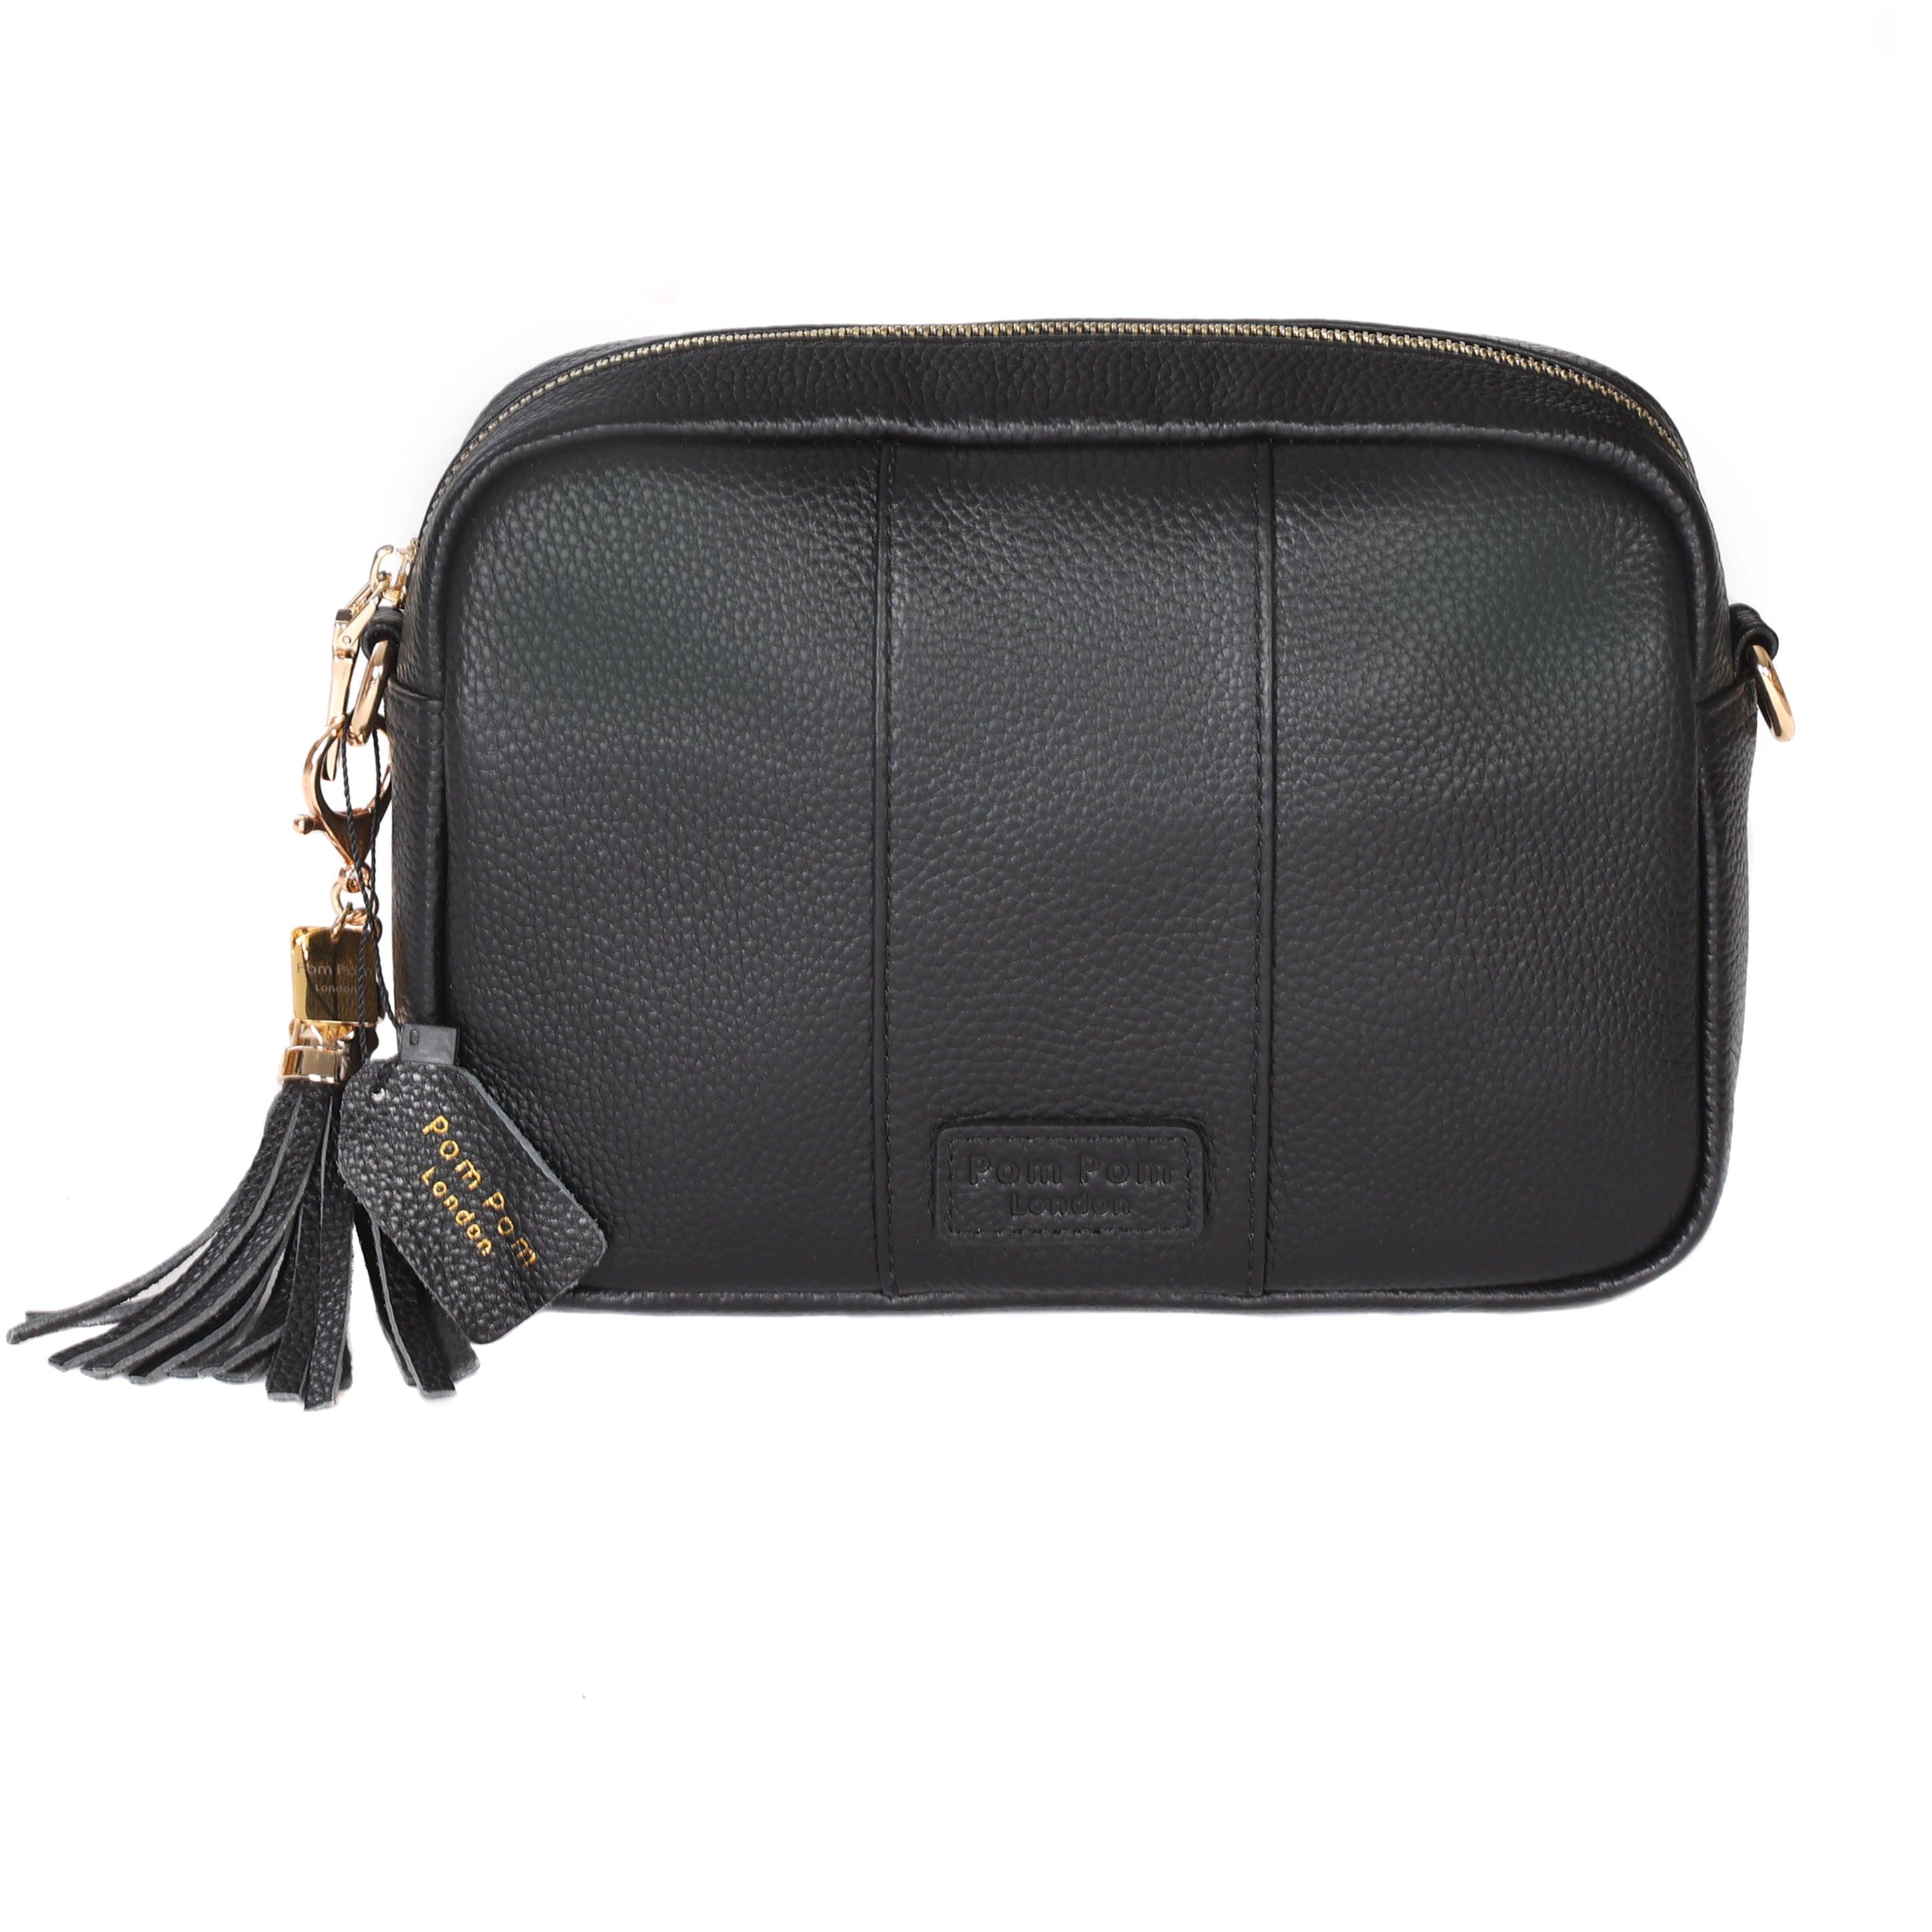 Clearance Designer Handbags - Macy's